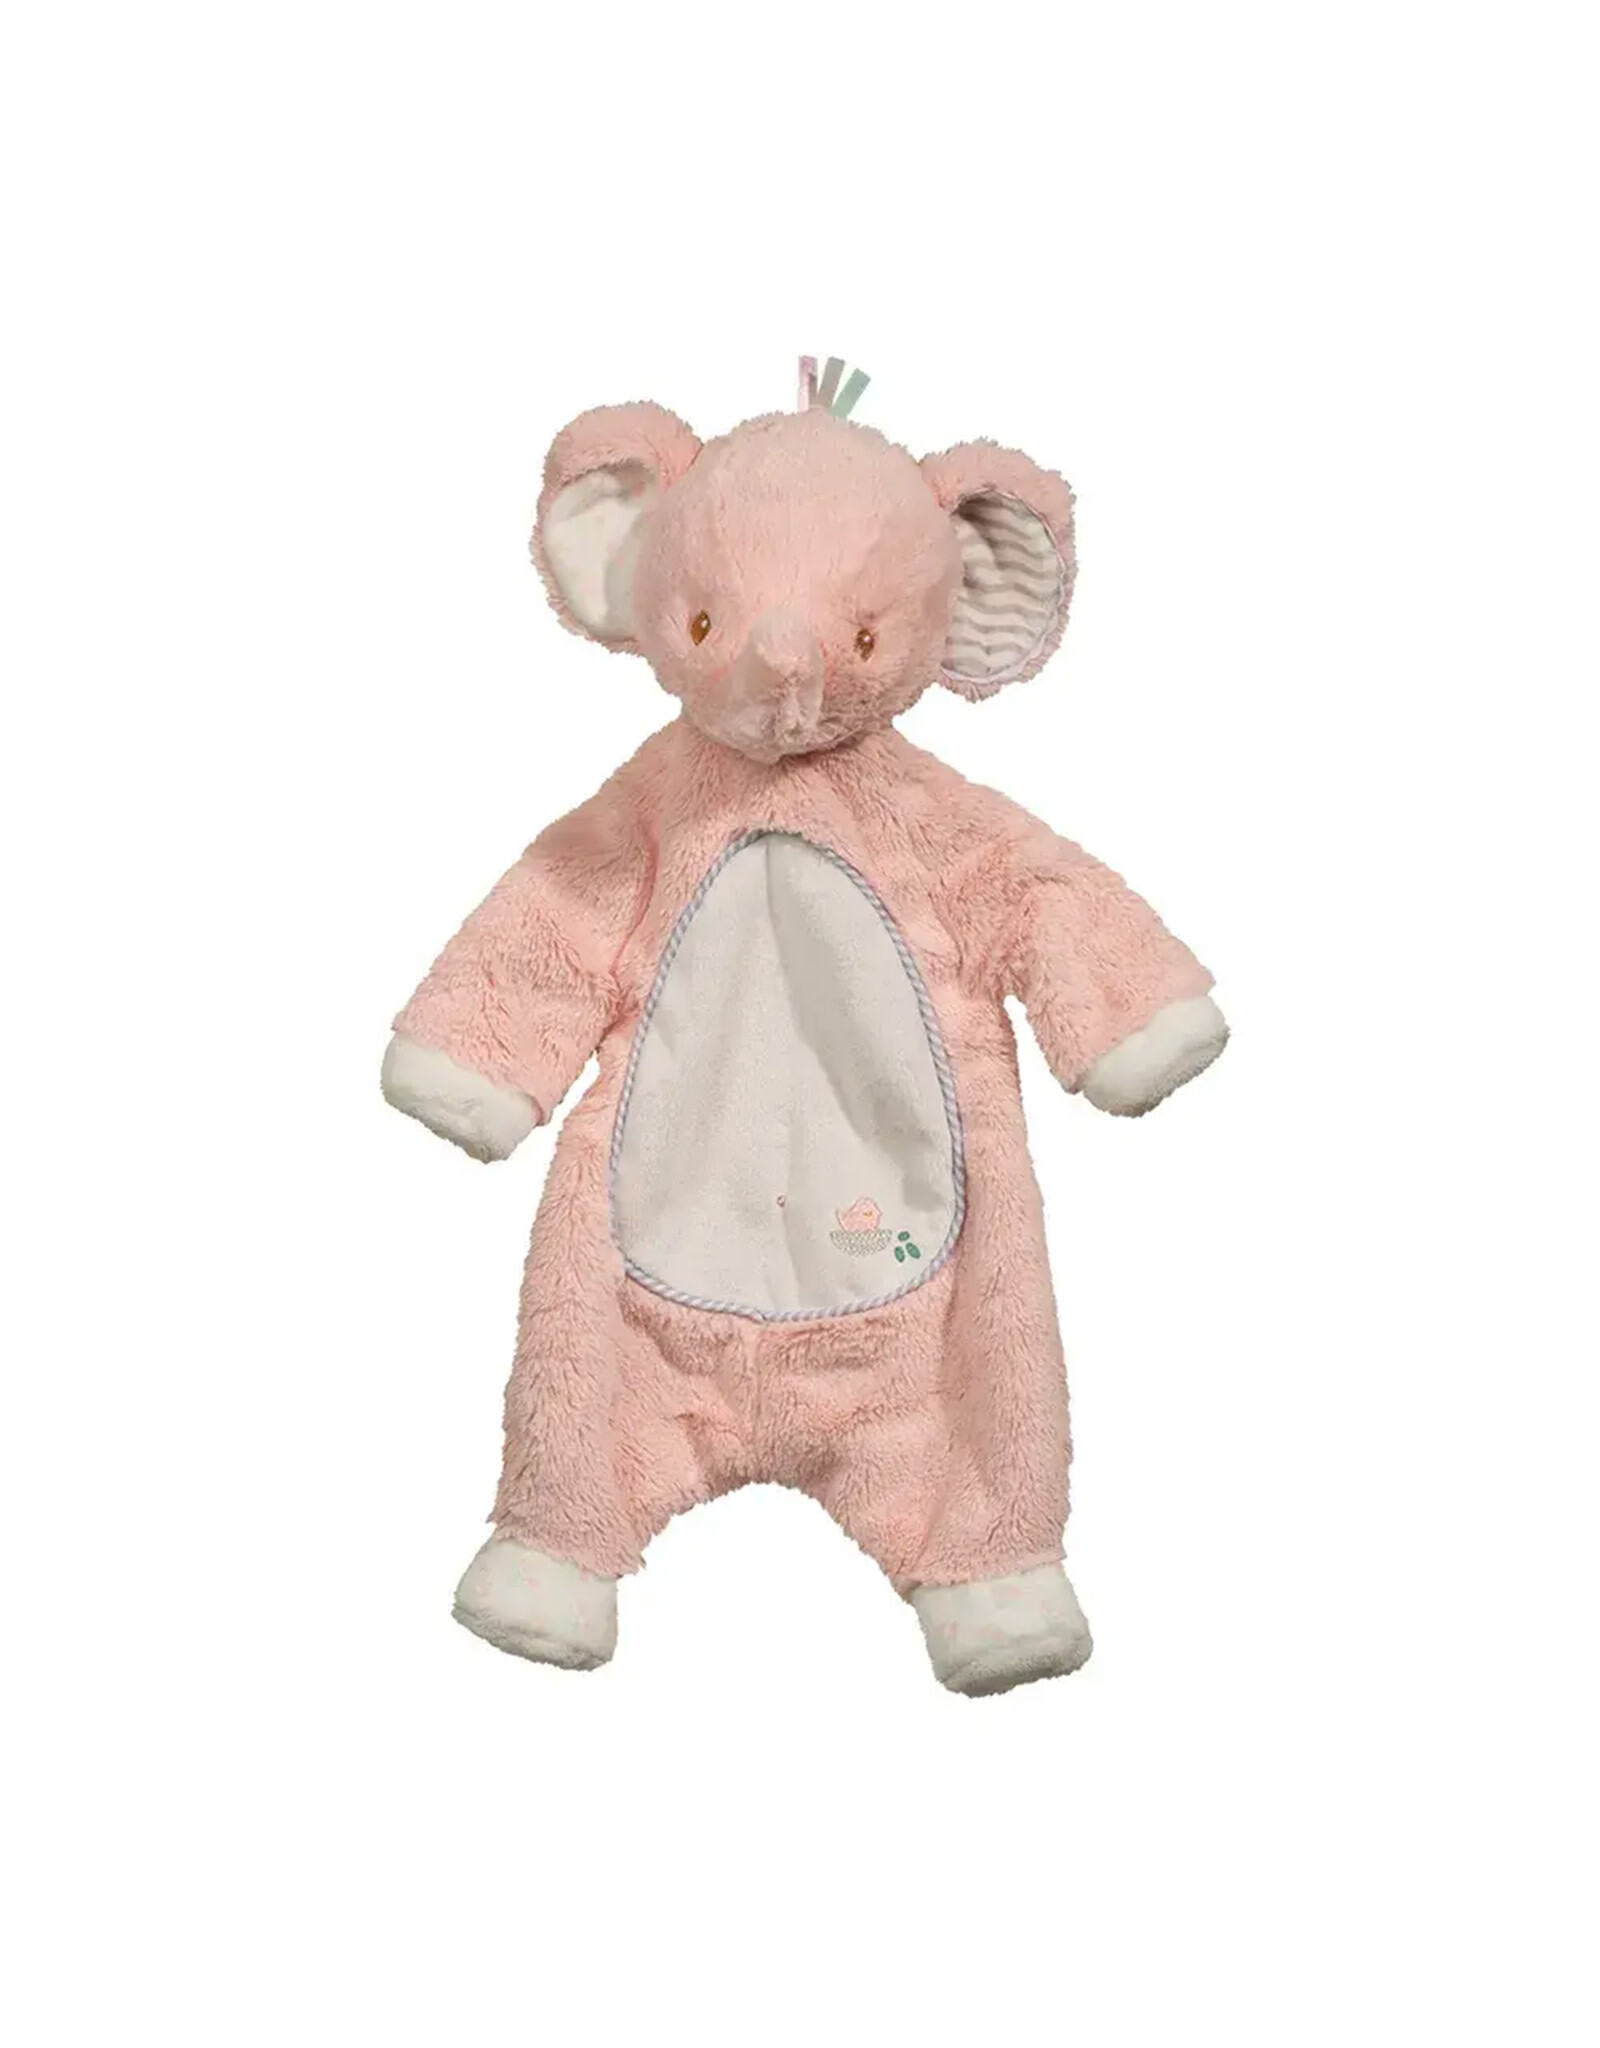 Douglas Douglas Cuddle Toys Baby Pink Elephant Schlumpie